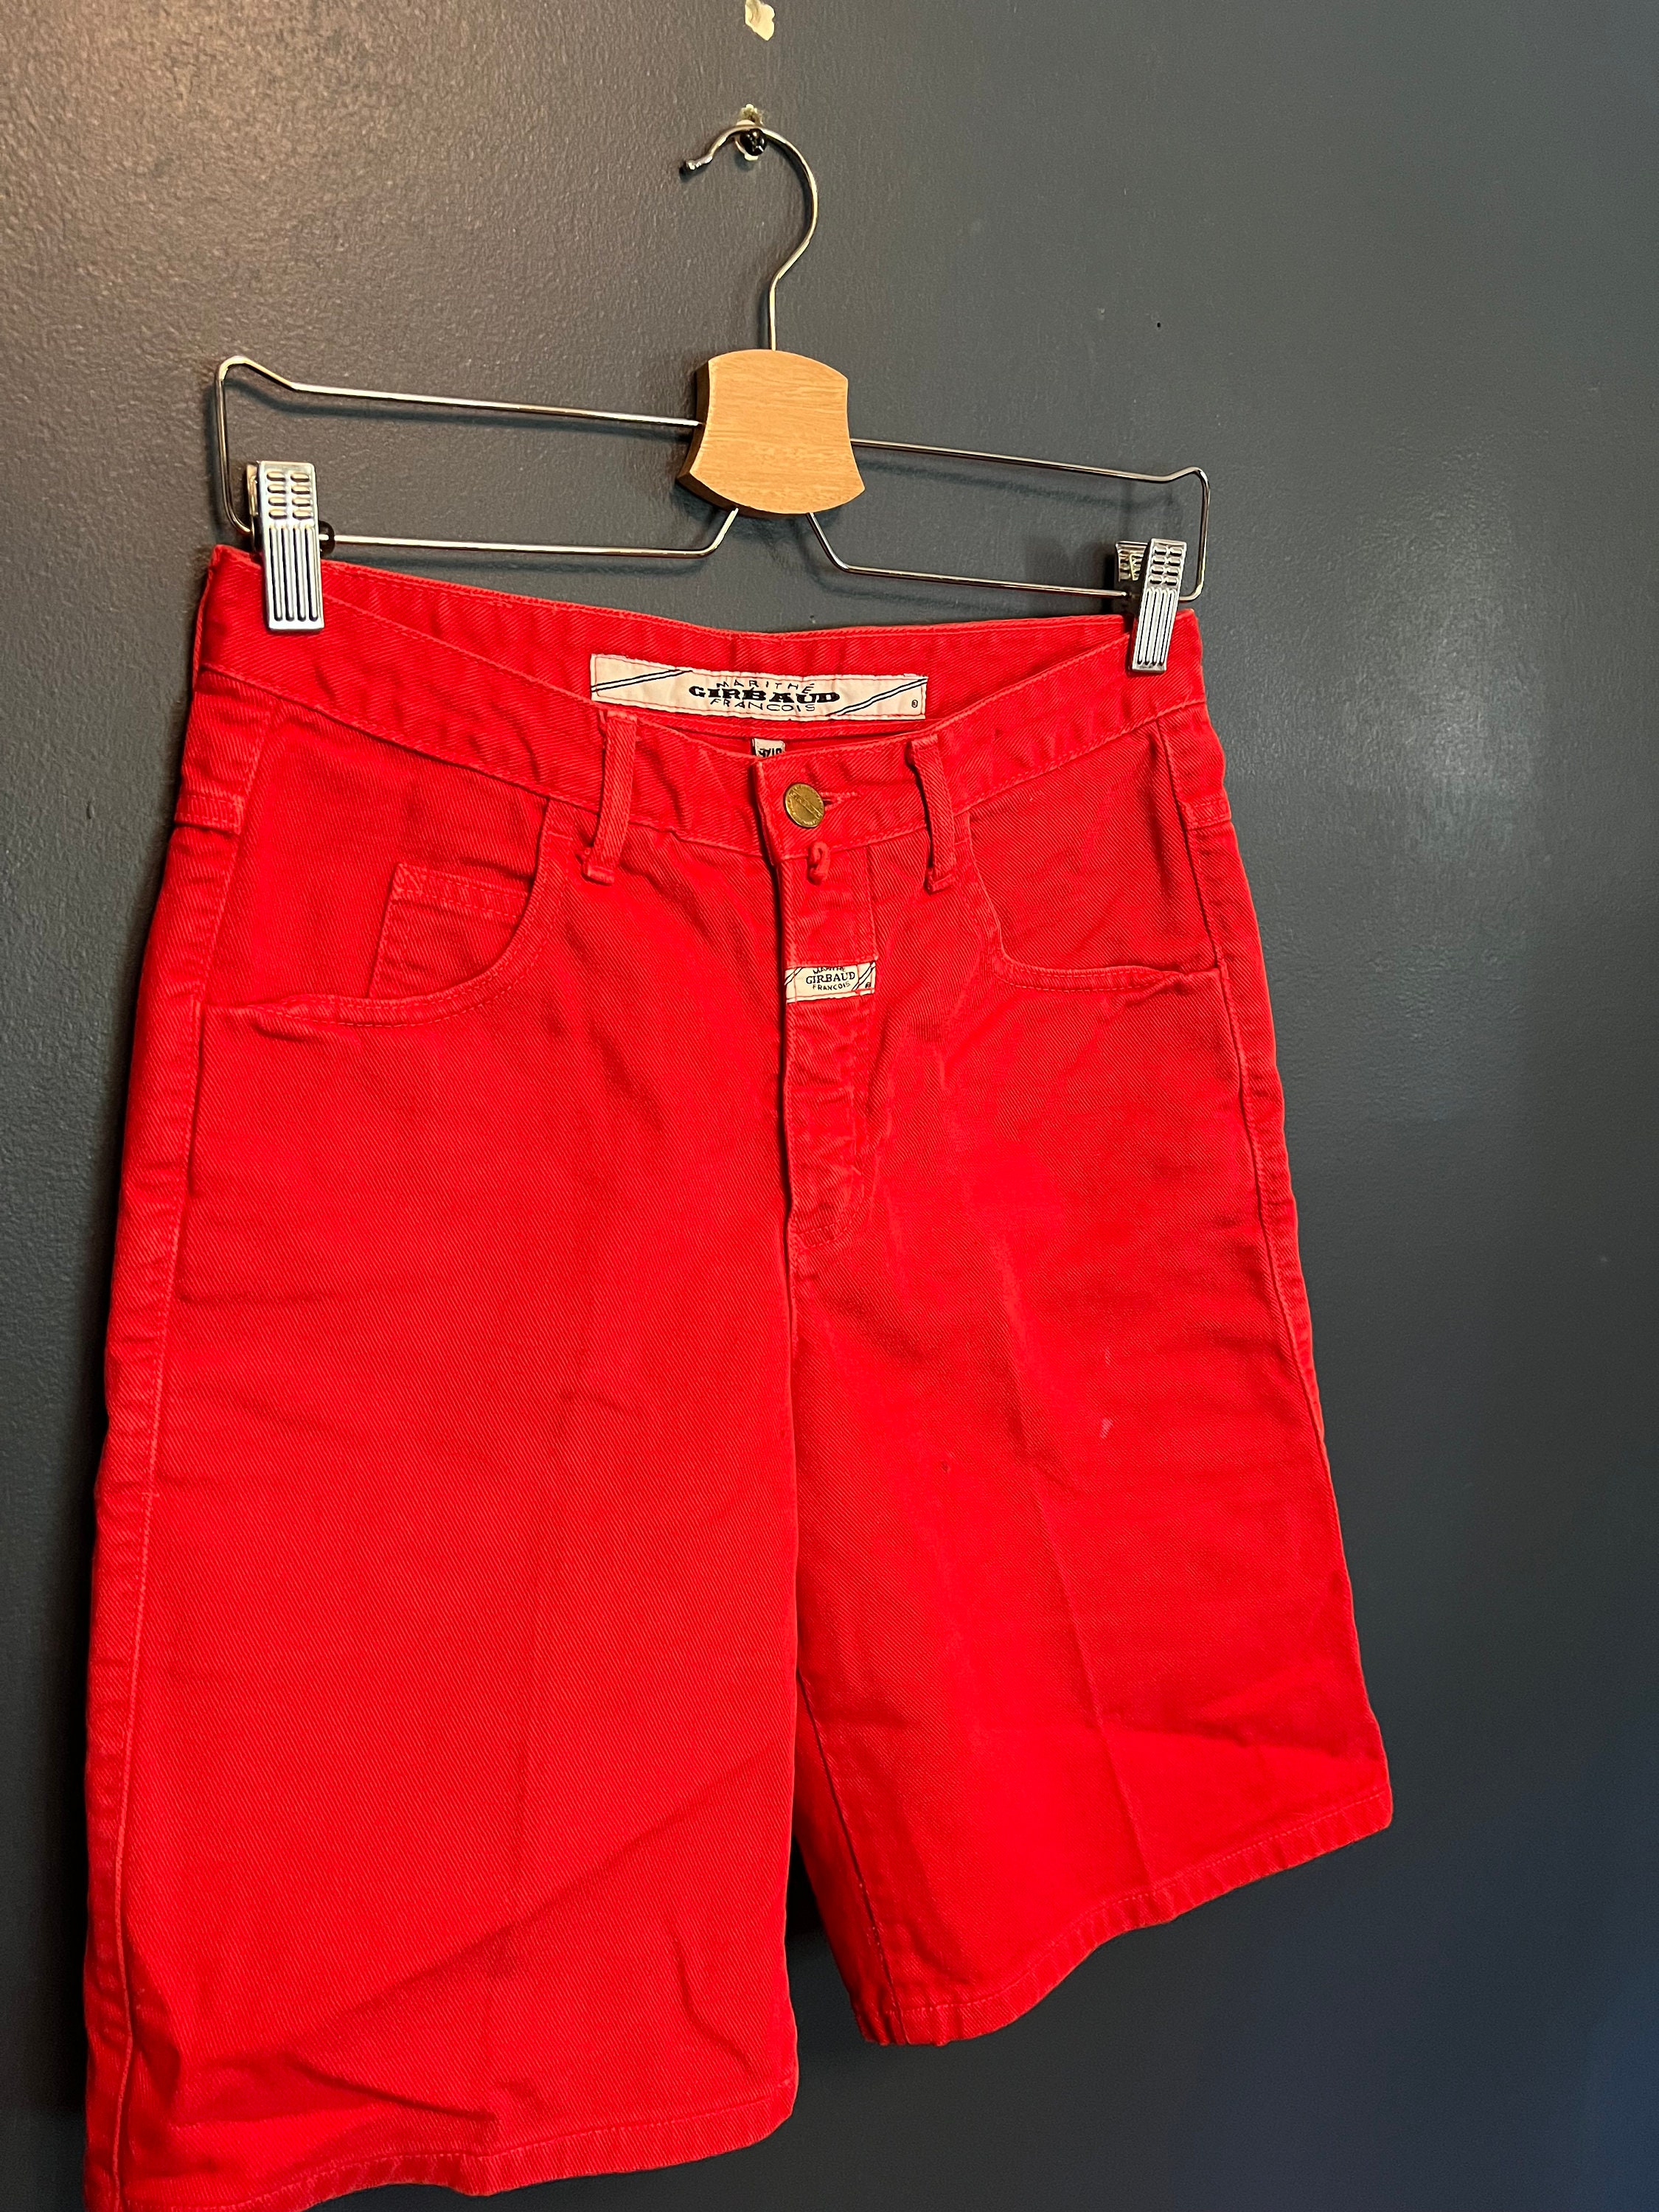 Vintage 90’s MFG Marithe Francois Girbaud Red Denim Shorts Size 9/10